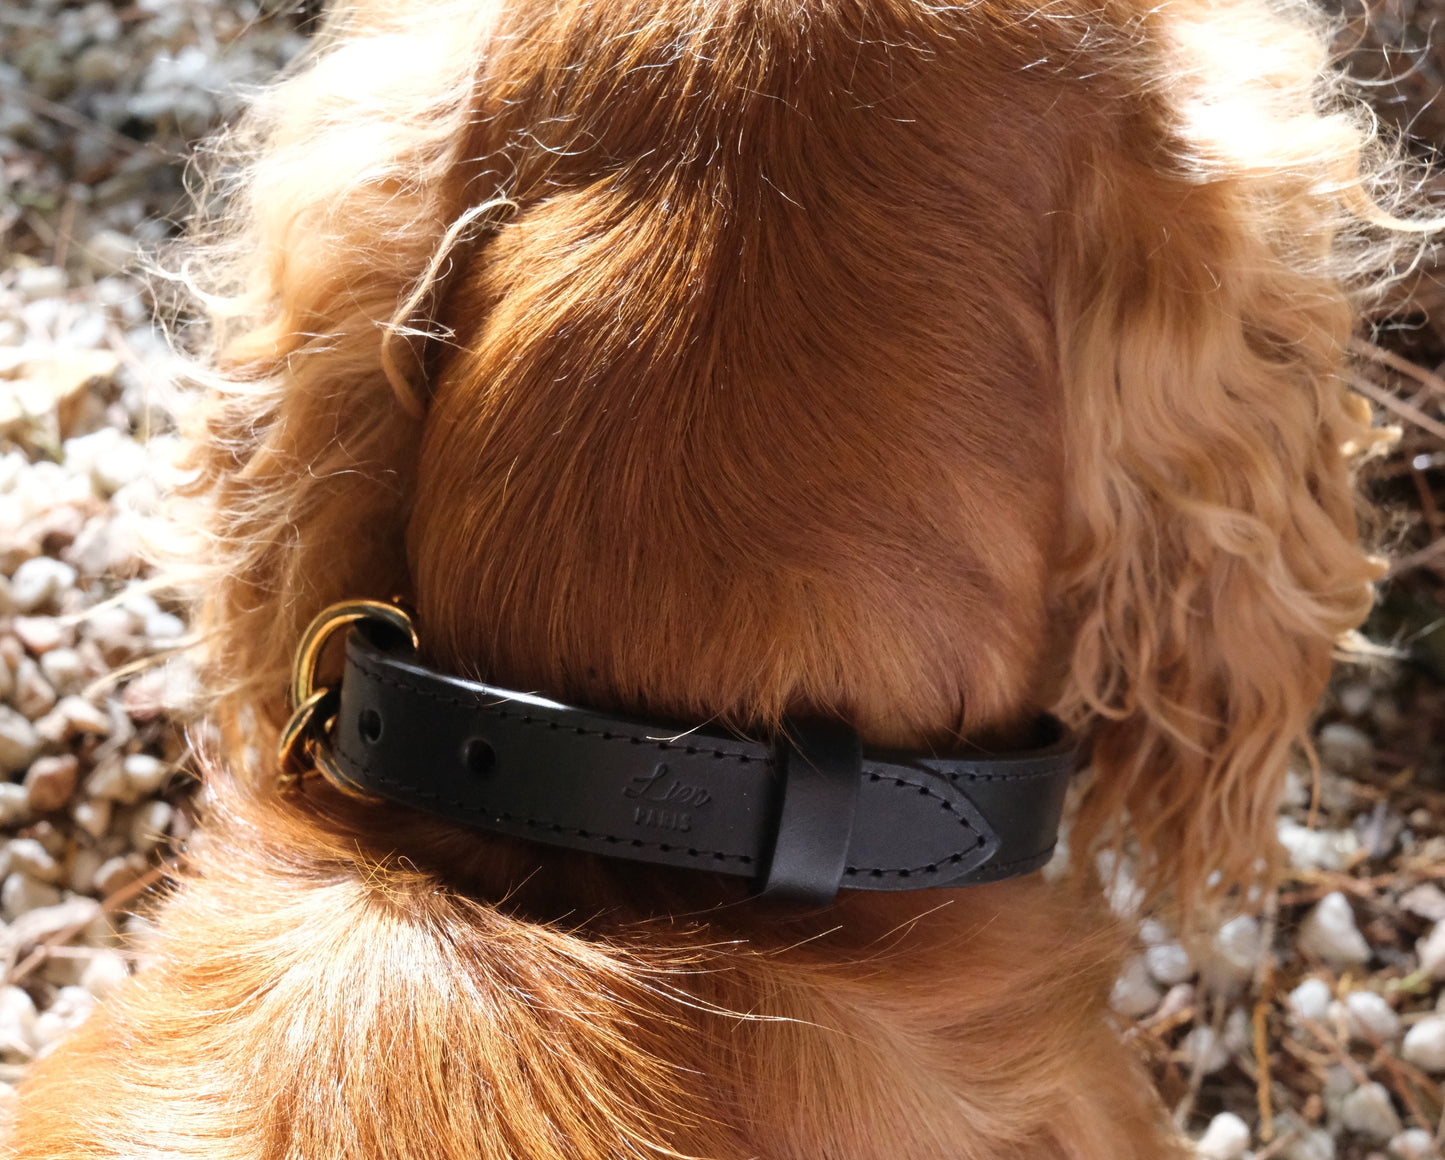 Collar for medium dogs in black